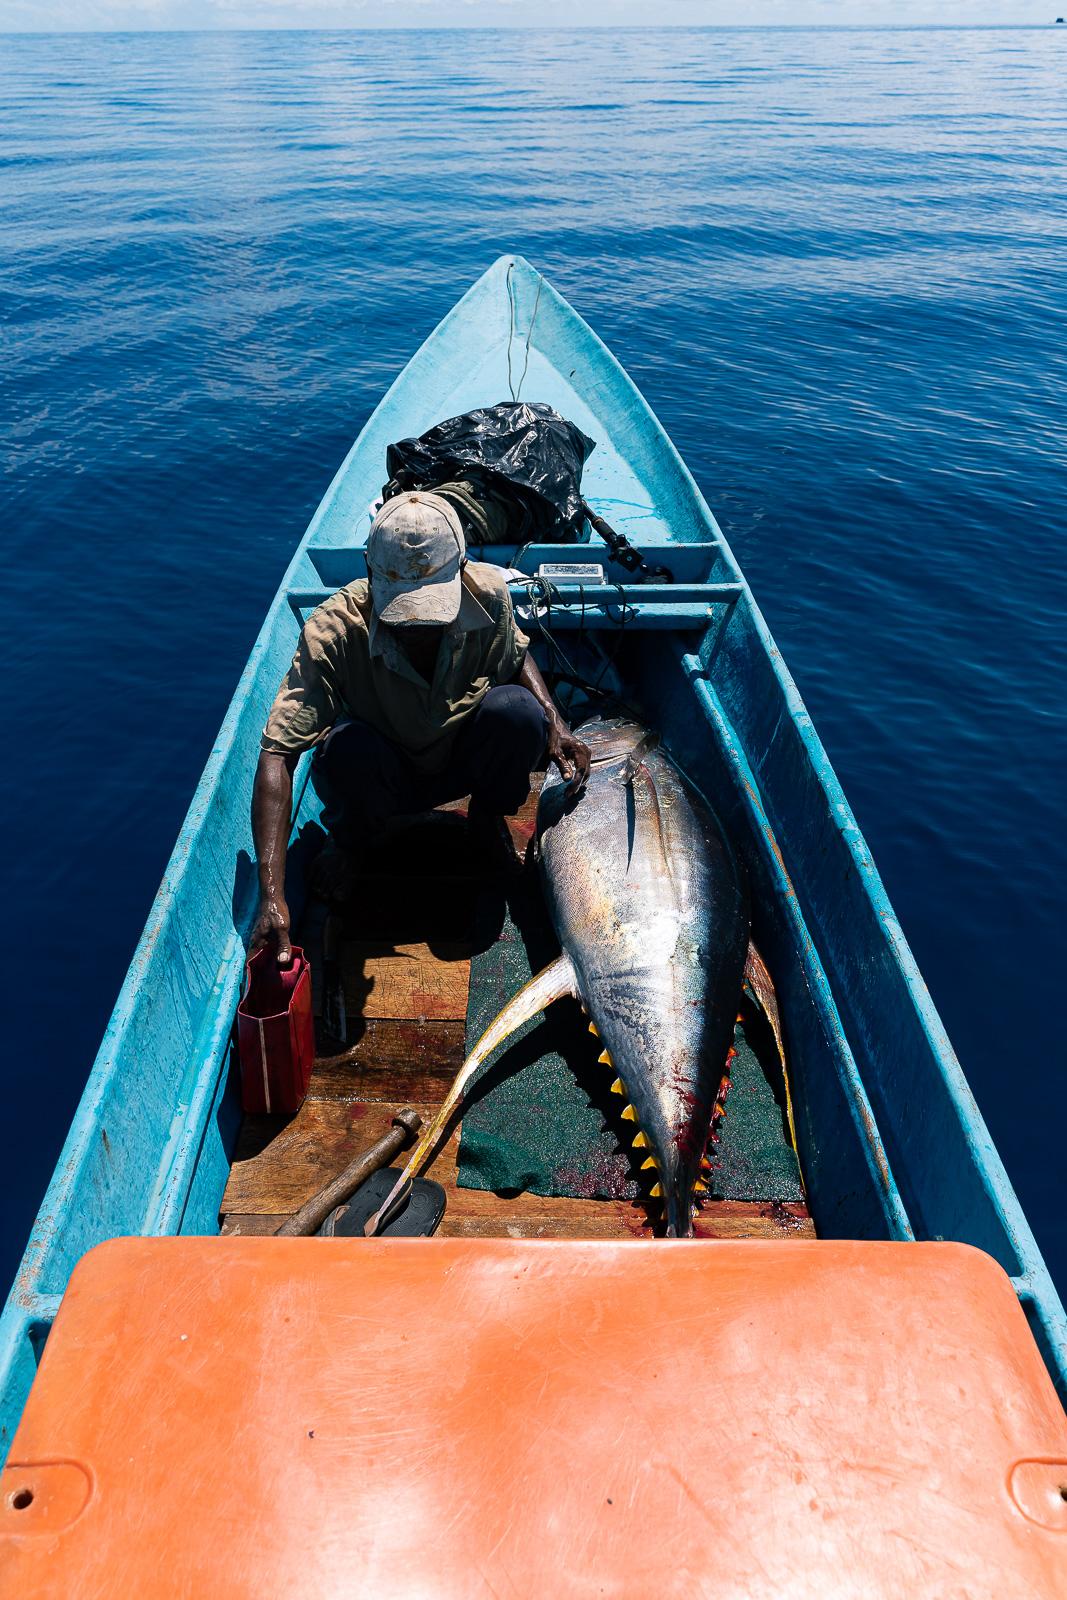 Yellowfin tuna new target of Indian fishing effort